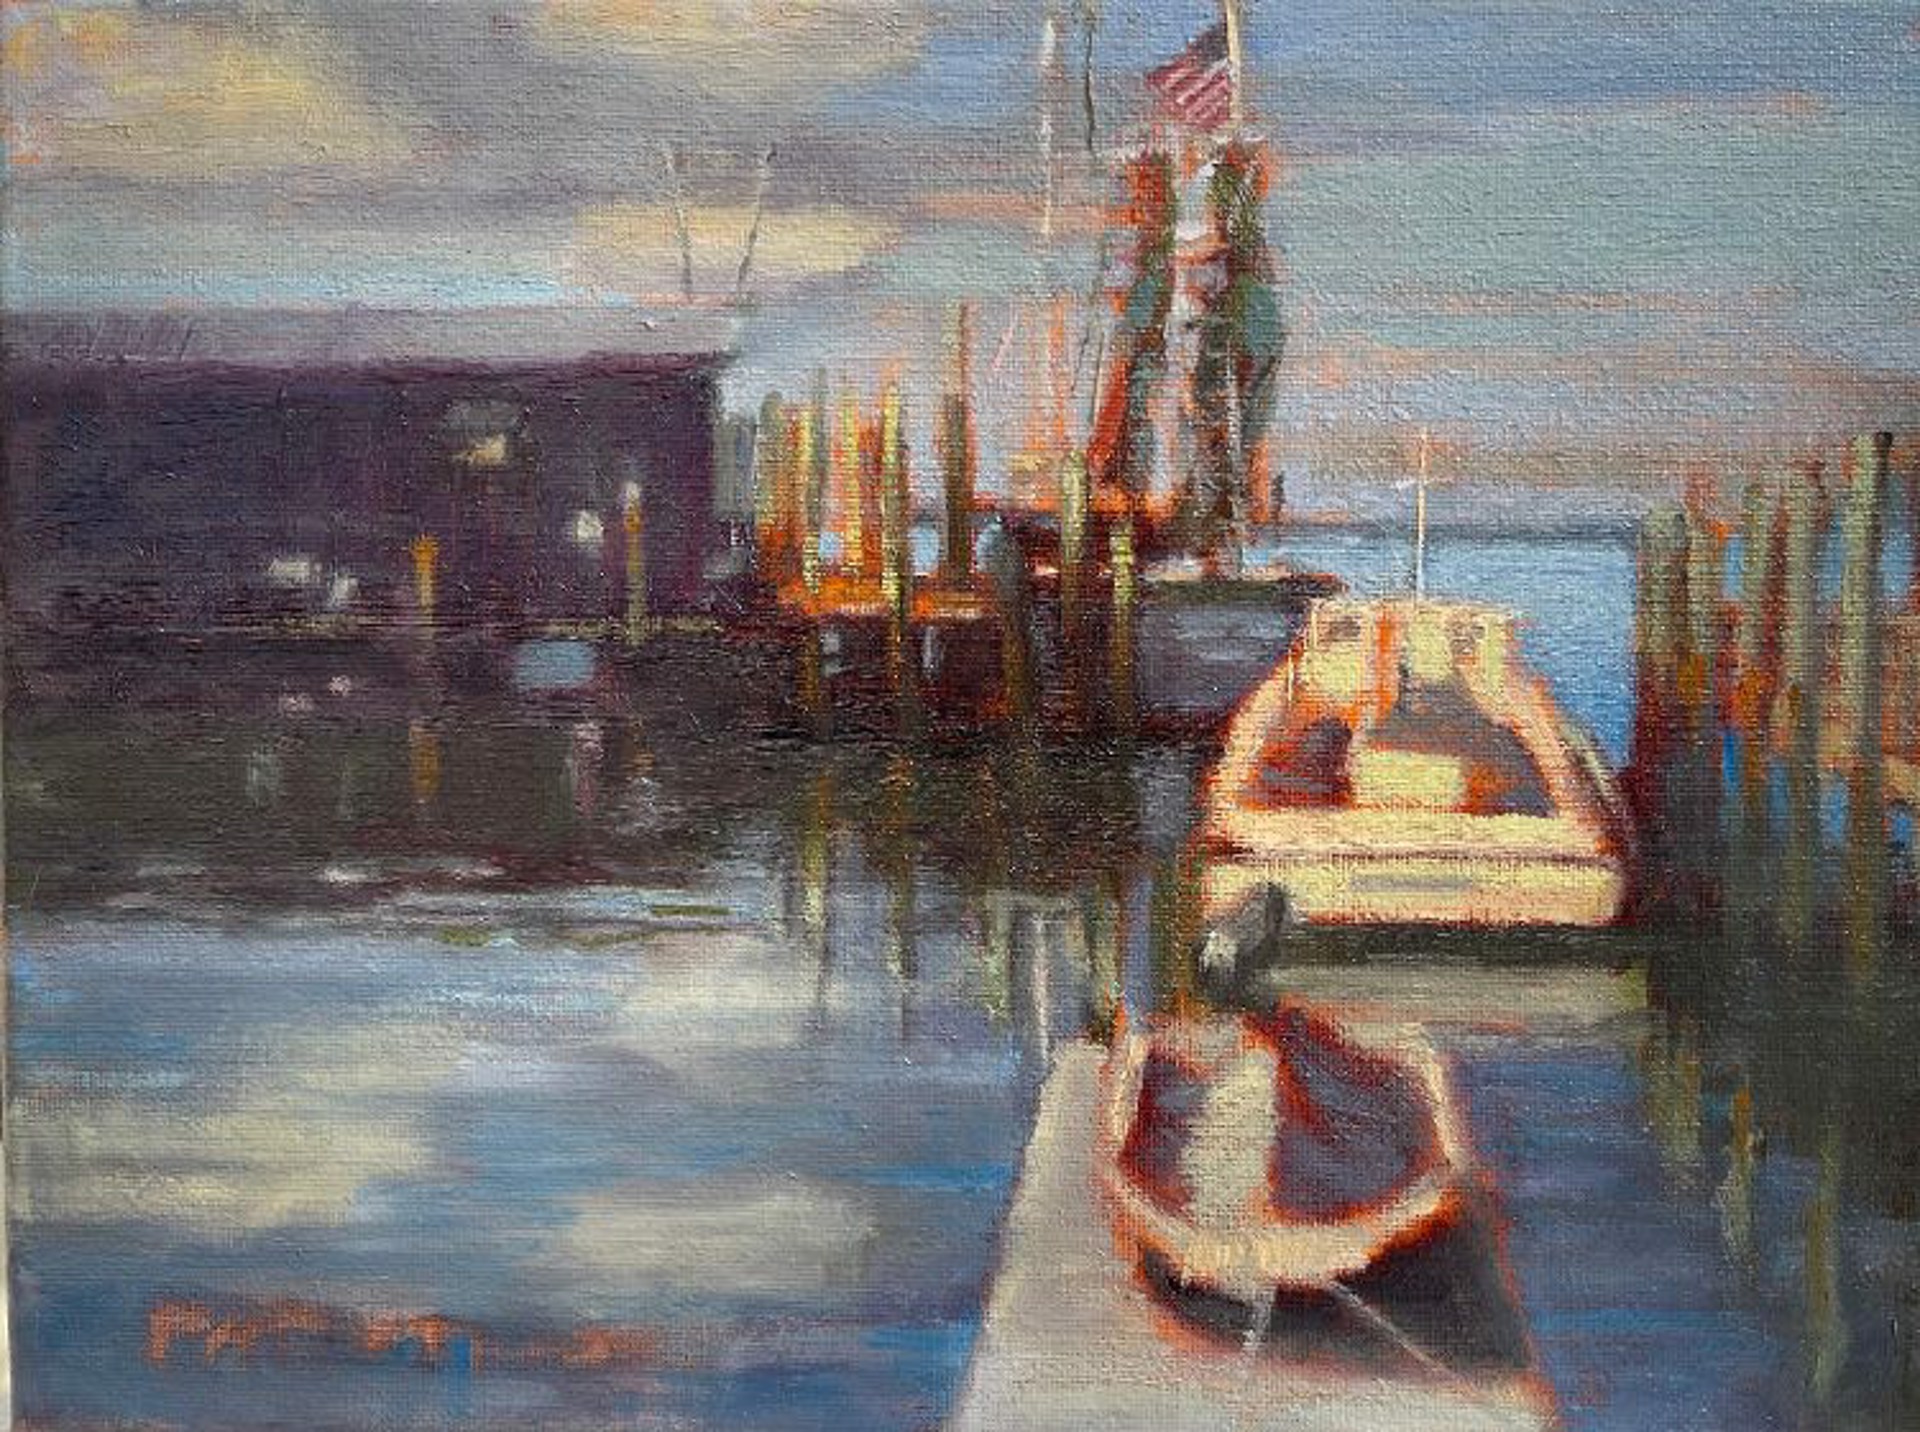 Study for Flotila by Leslie Pratt-Thomas